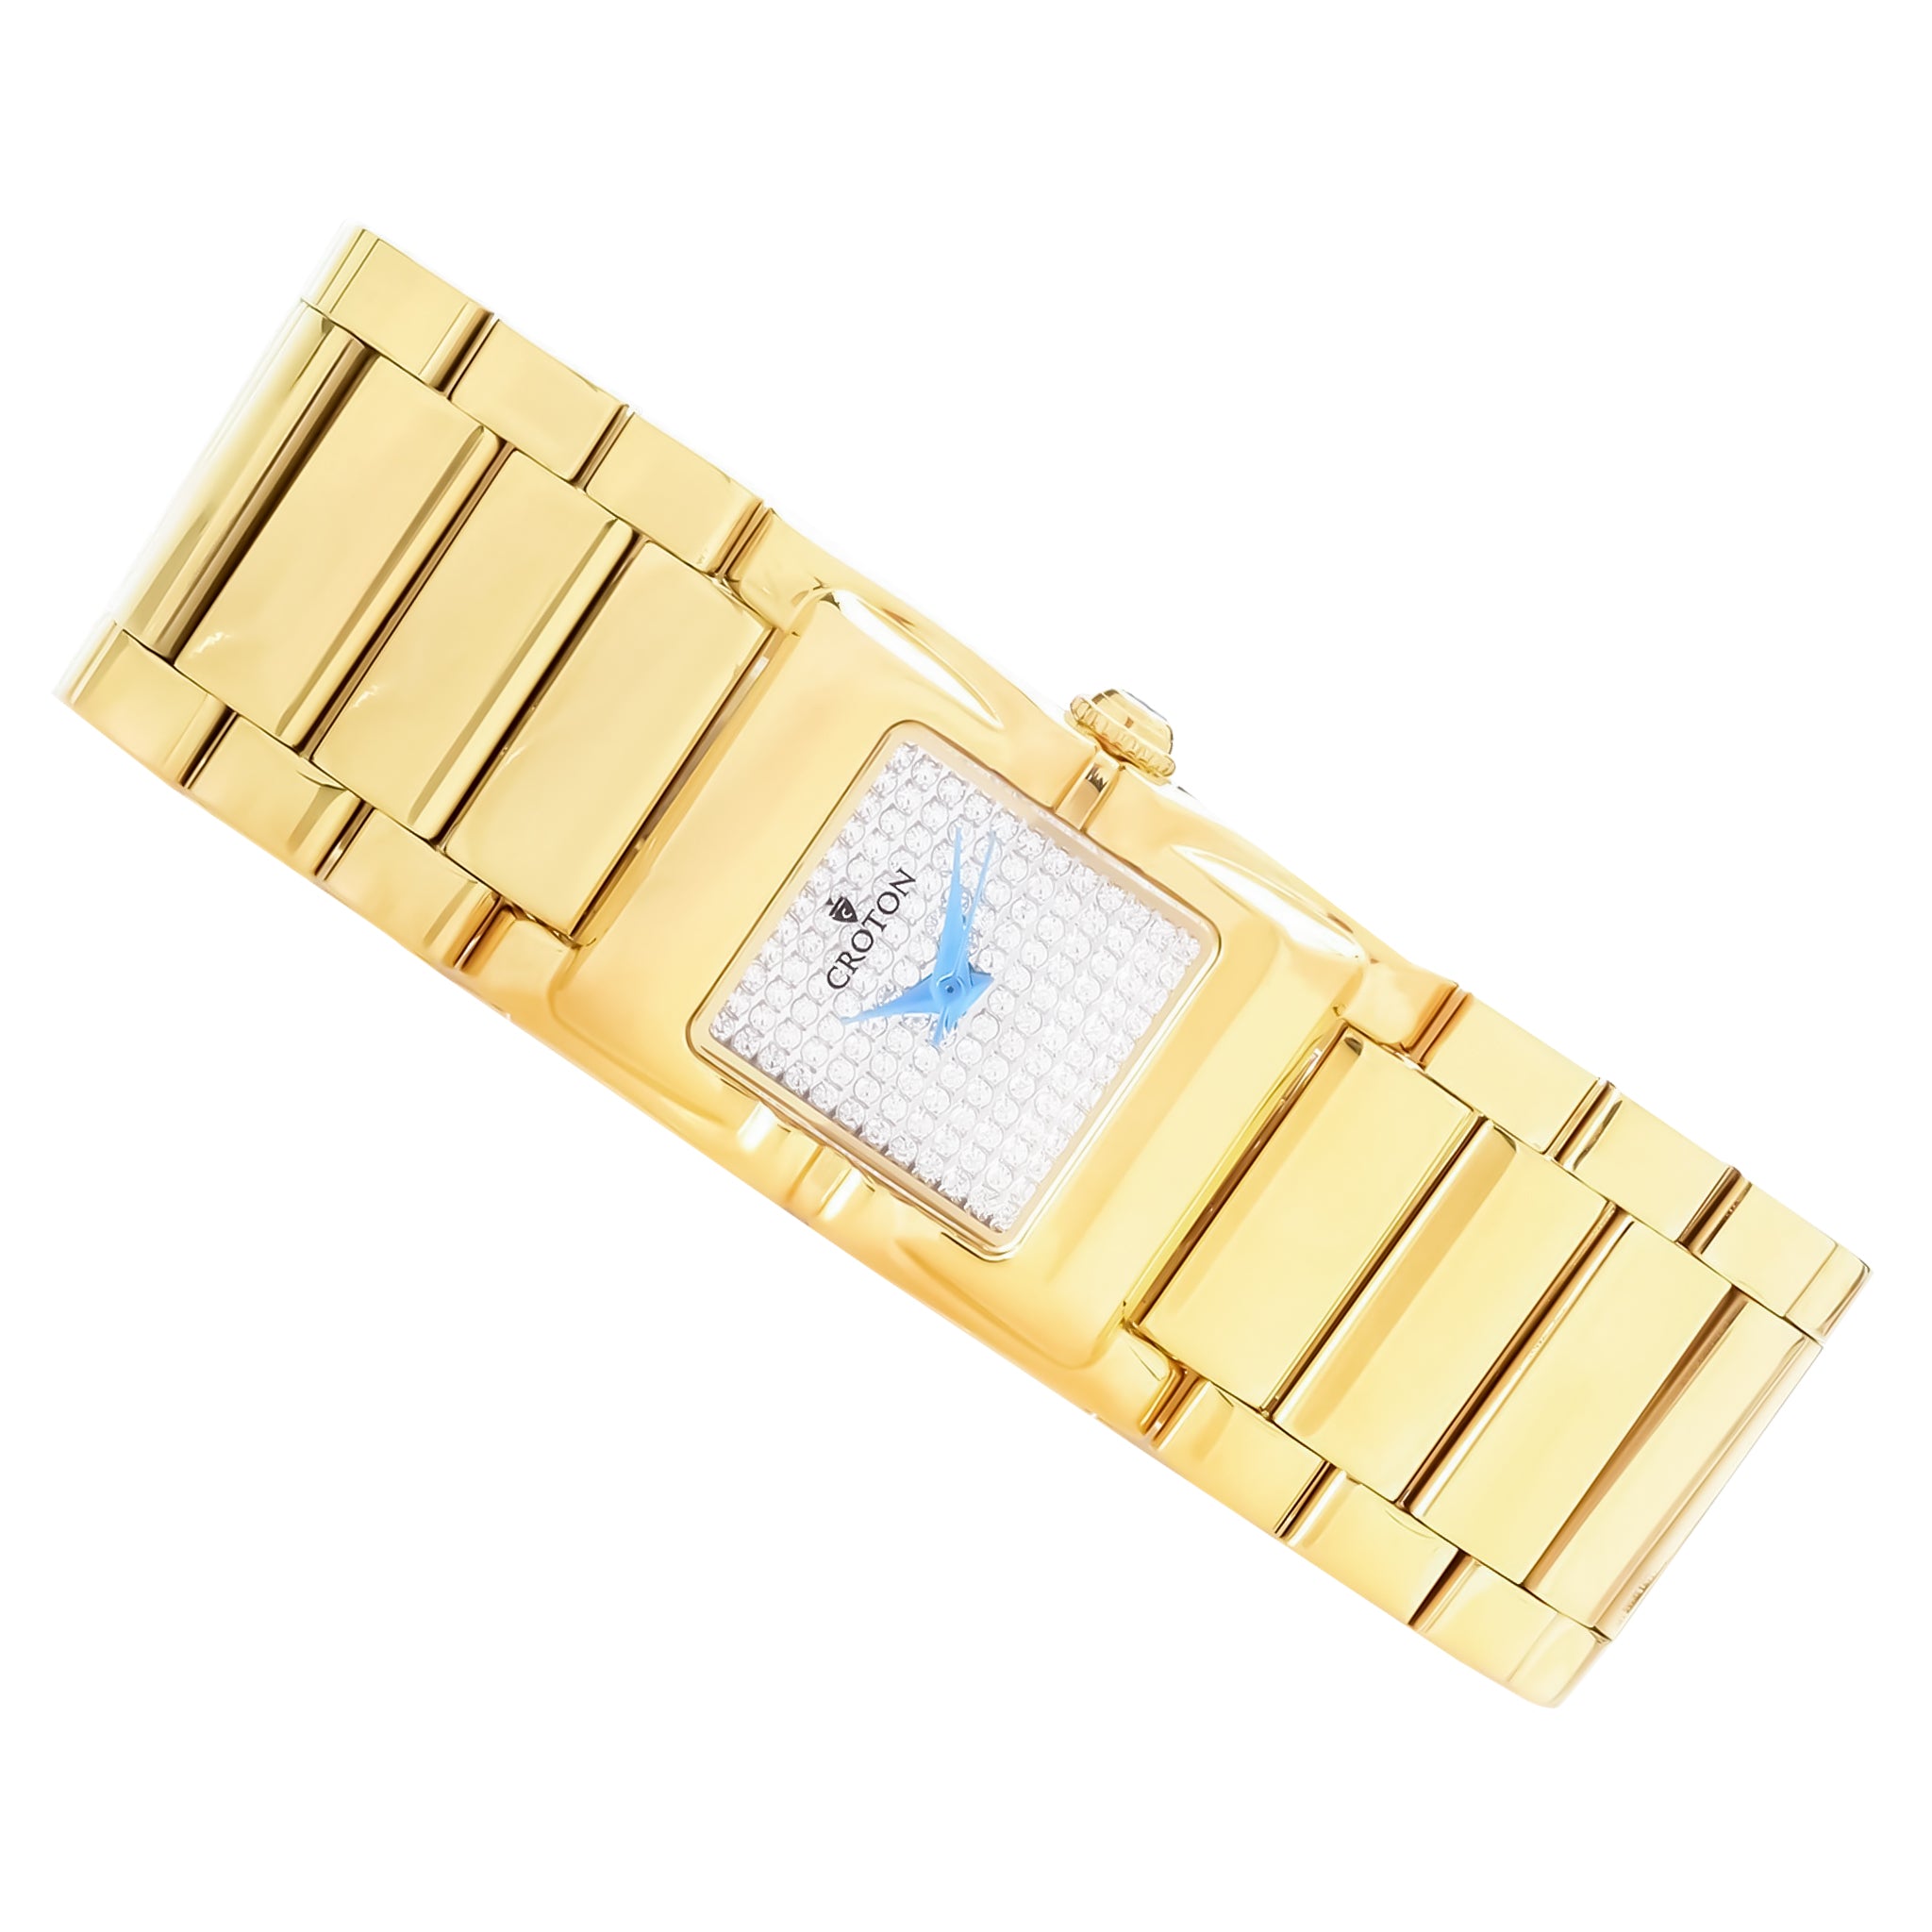 Ladies Goldtone Swiss Parts Bracelet Watch with Square CZ Pave Dial